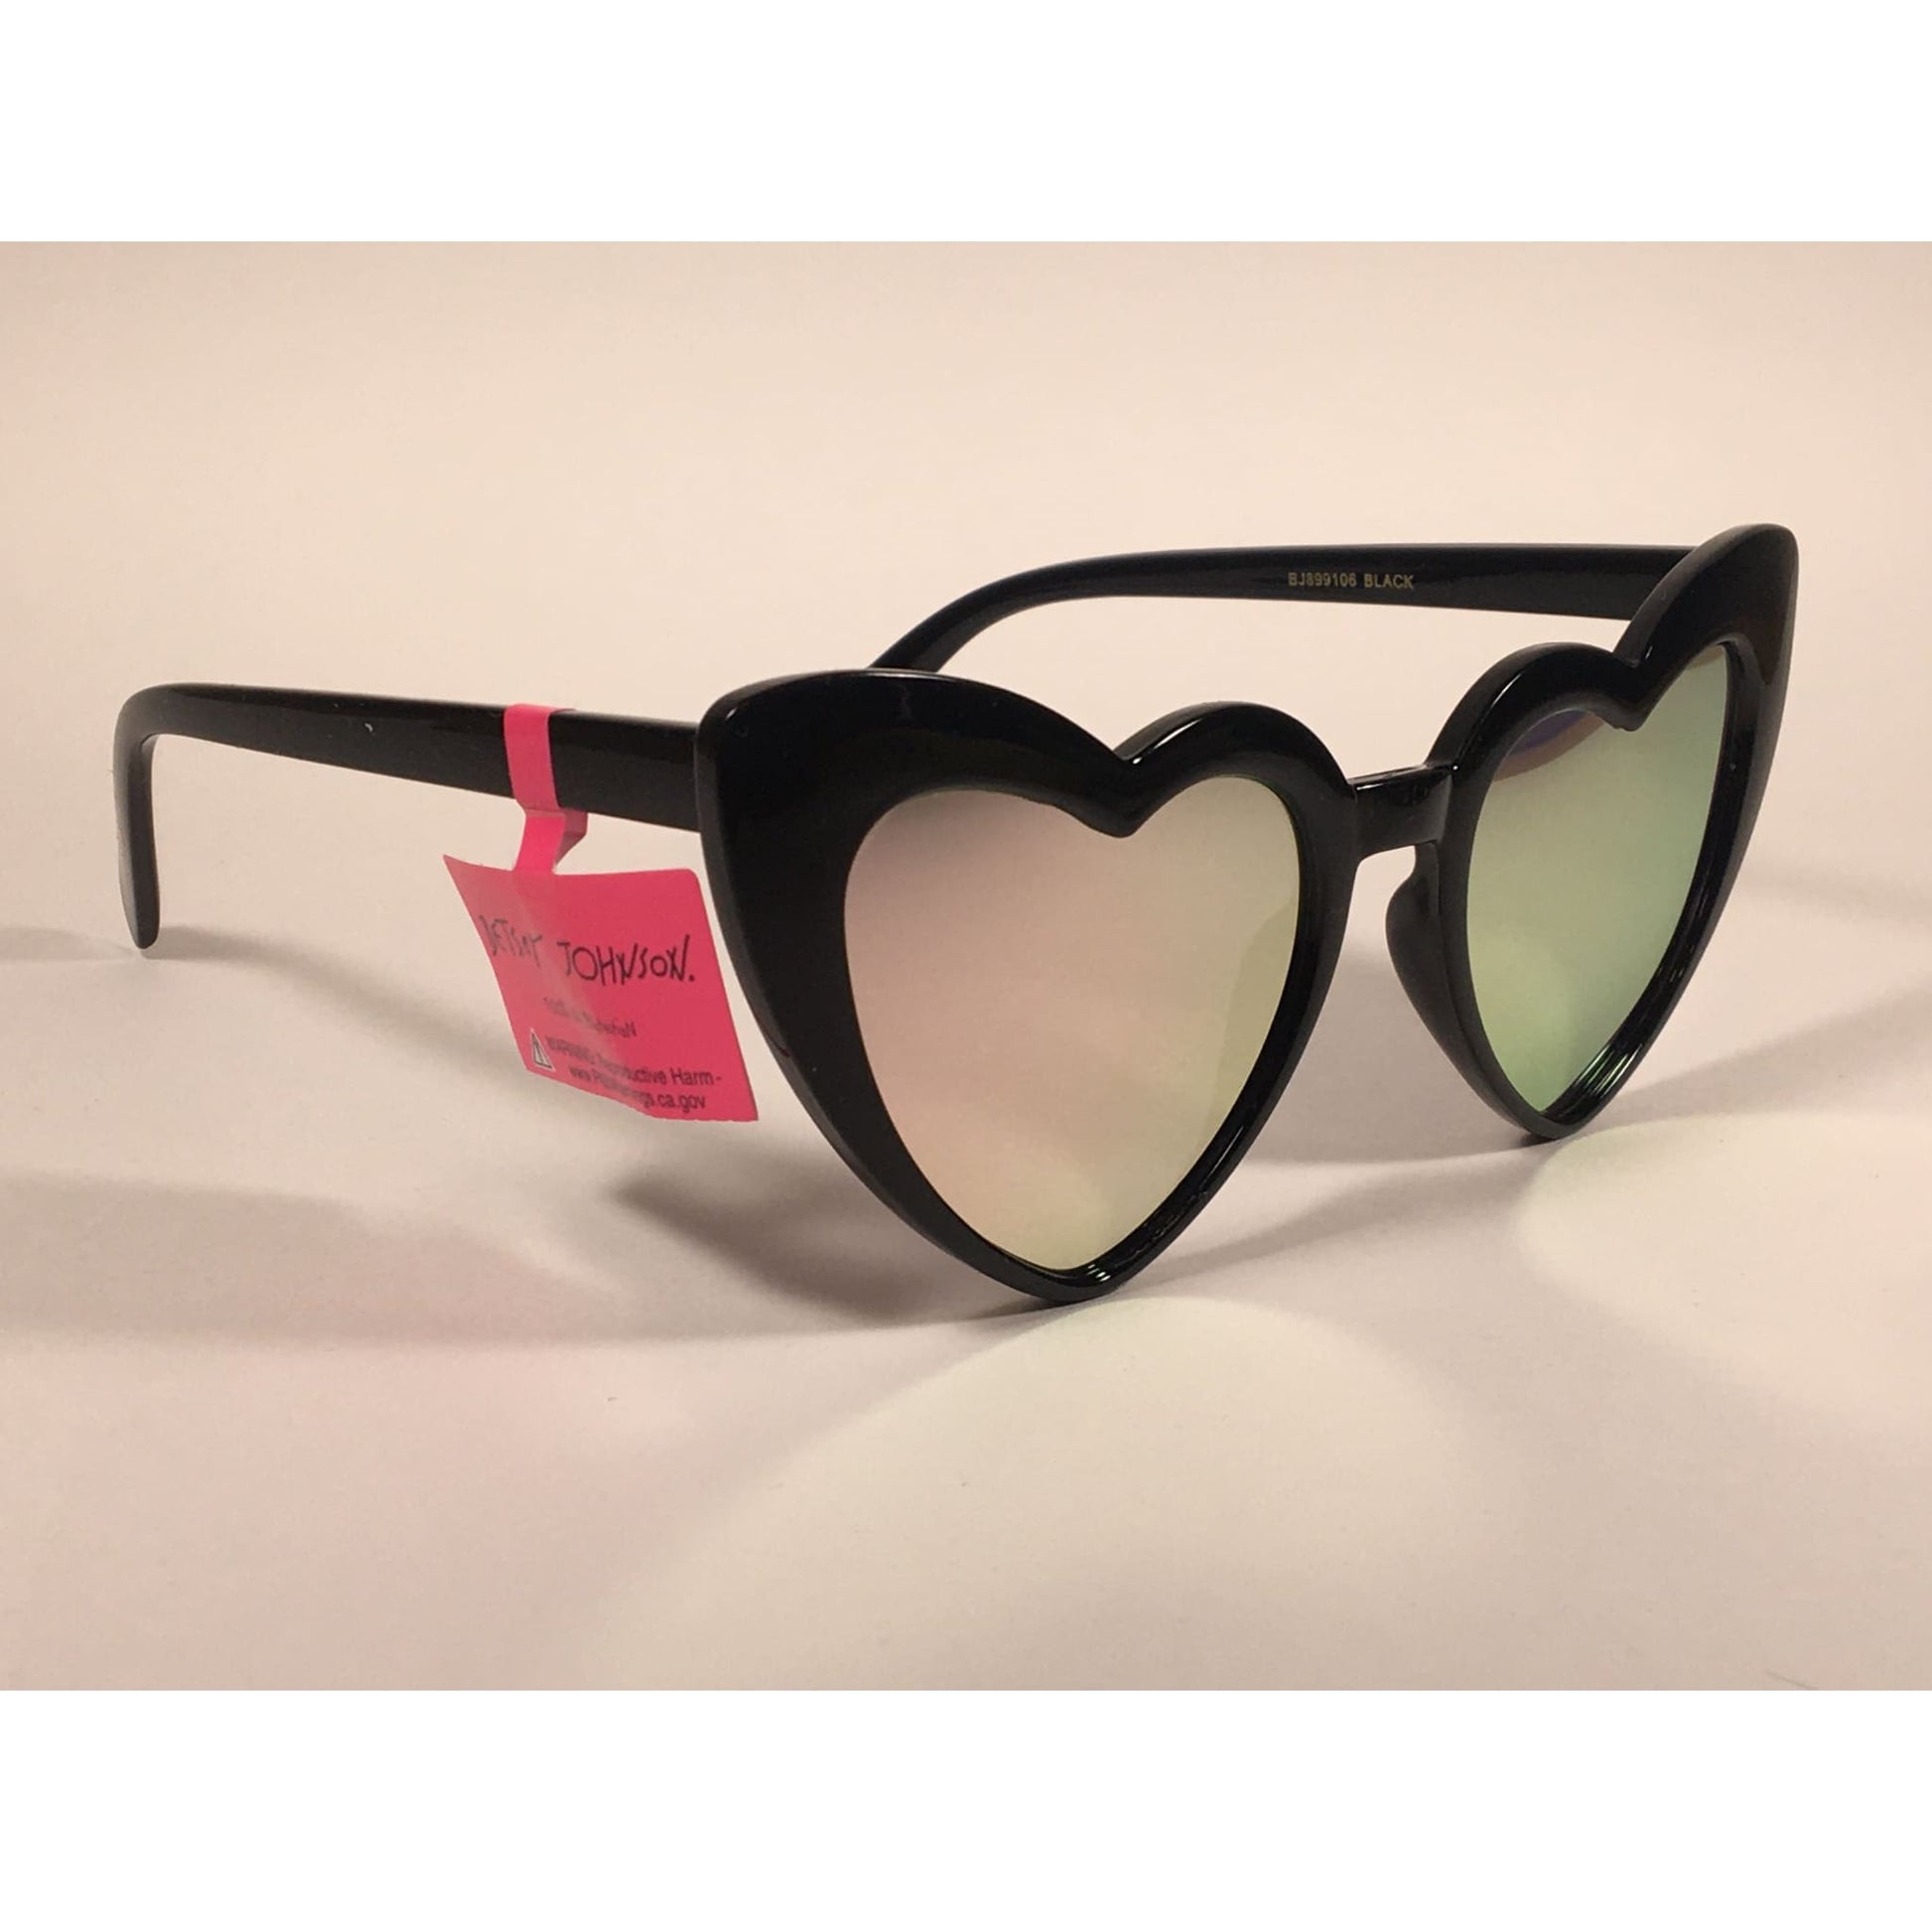 Betsey Johnson Sliding Heart Sunglasses Black Pink Coral Mirror Lens BJ899106 - Sunglasses